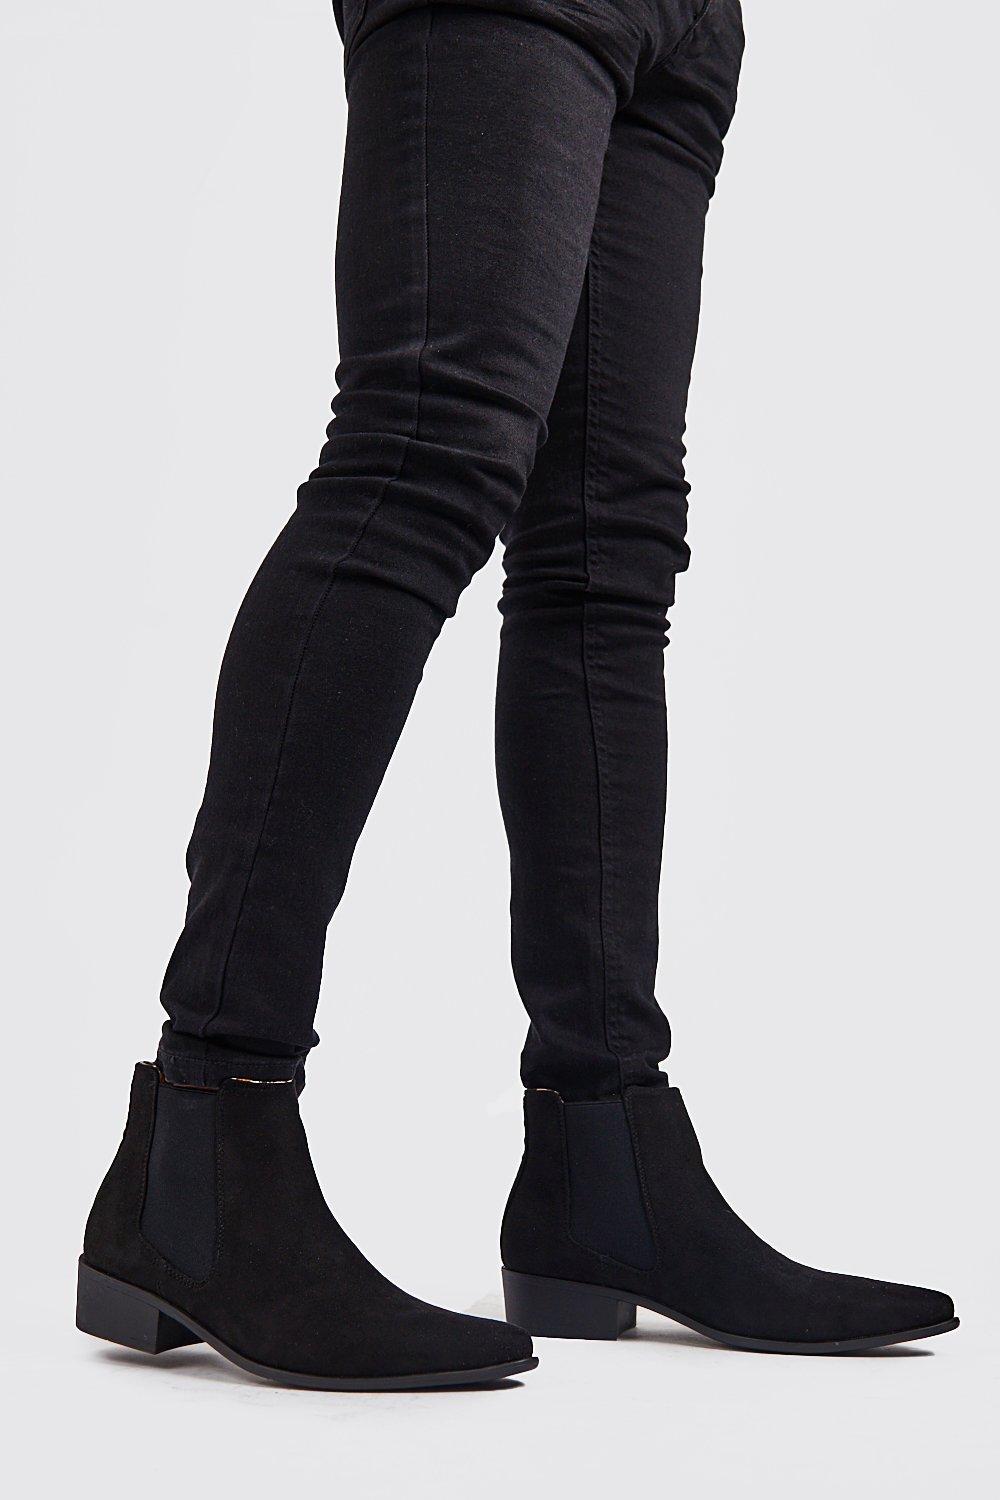 black suede chelsea boots